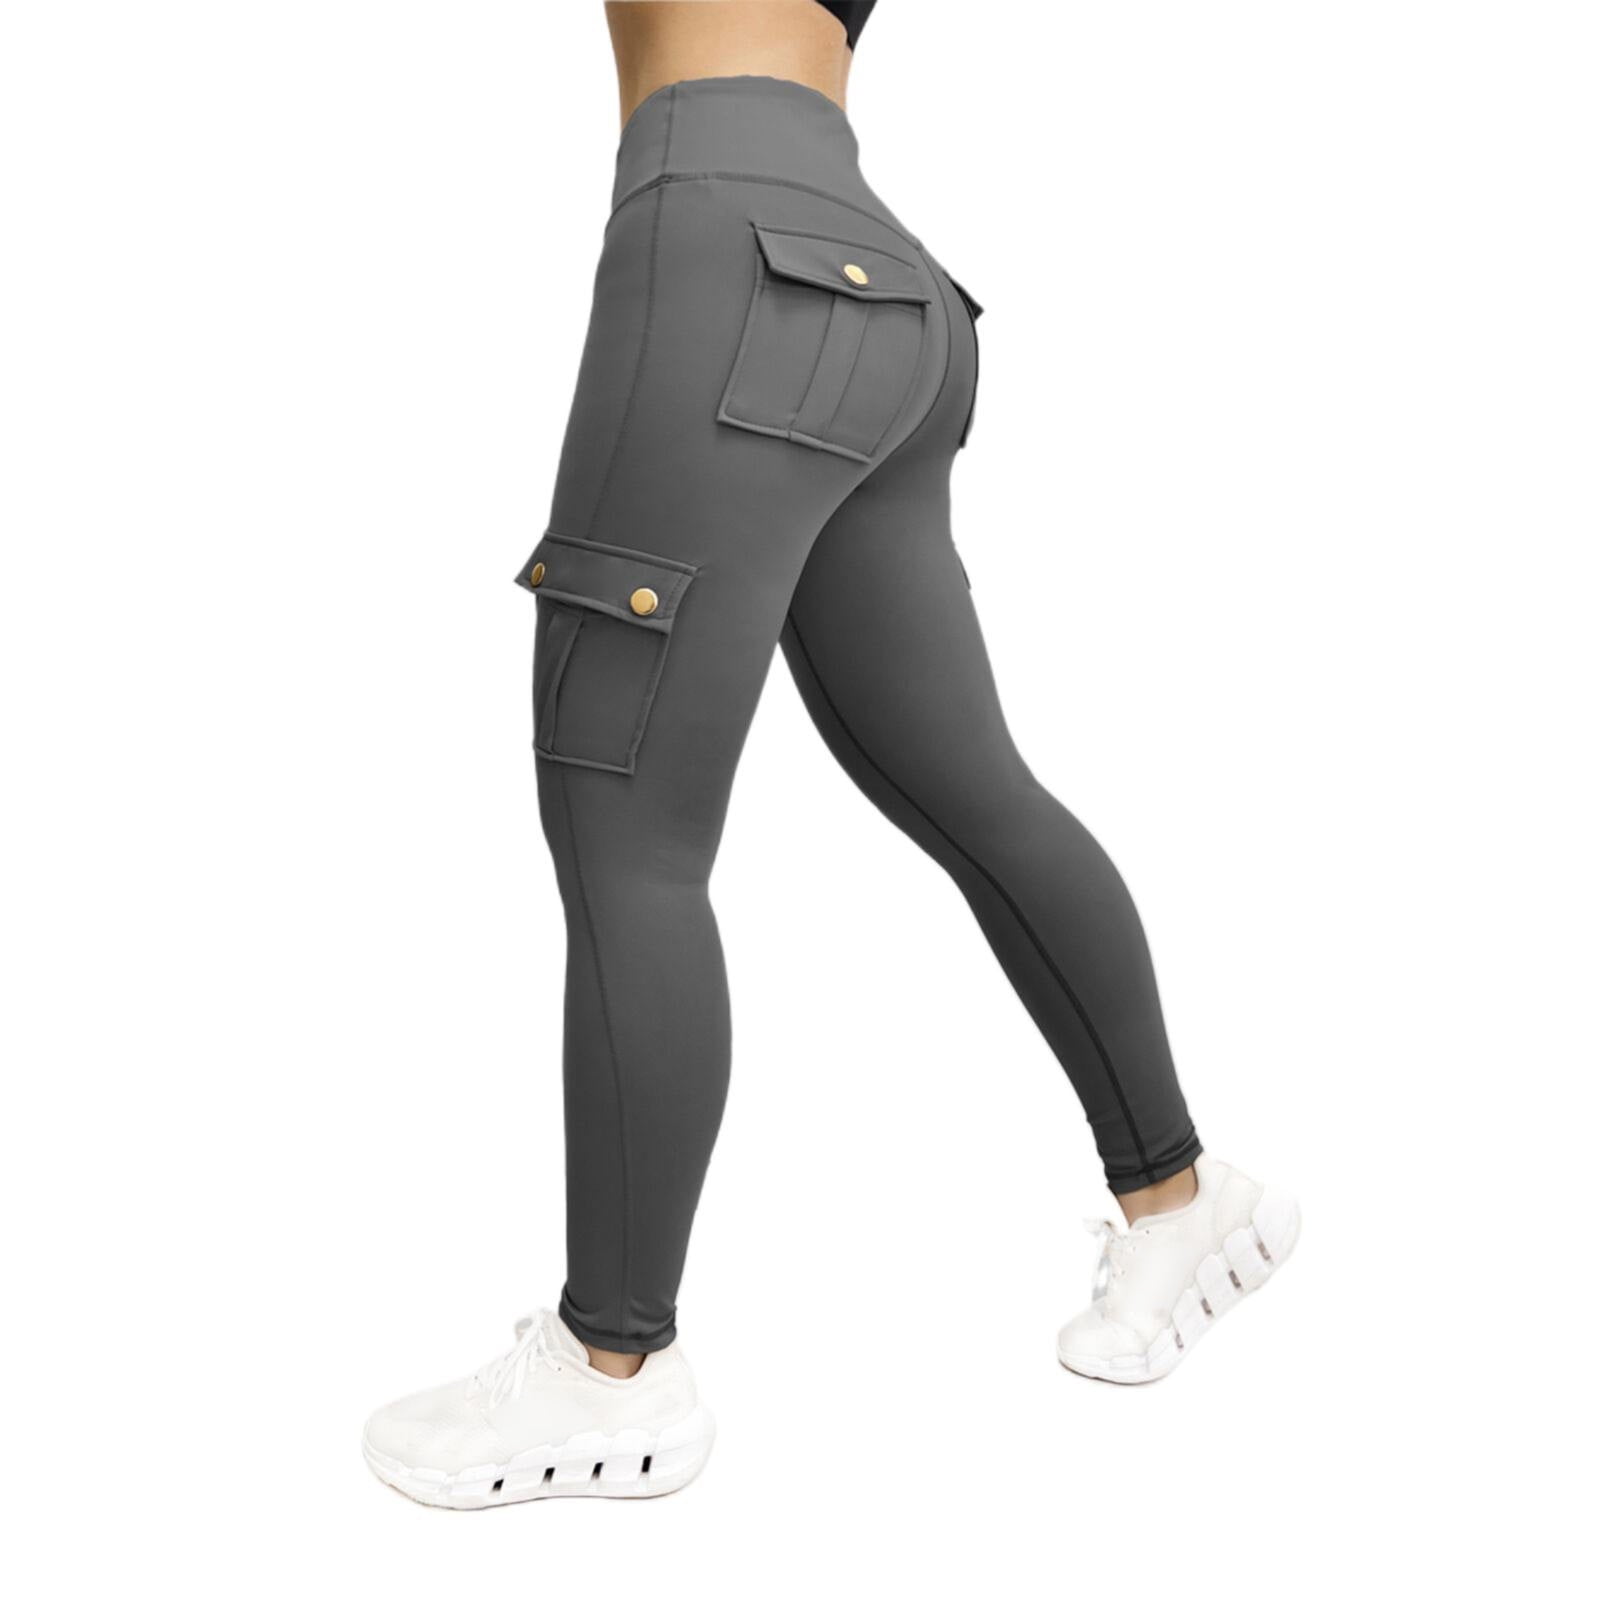 XFLWAM Butt Leggings with Pockets for Women High Waist Cargo Pants Work  Pants Gym Workout Leggings Dark Gray XS